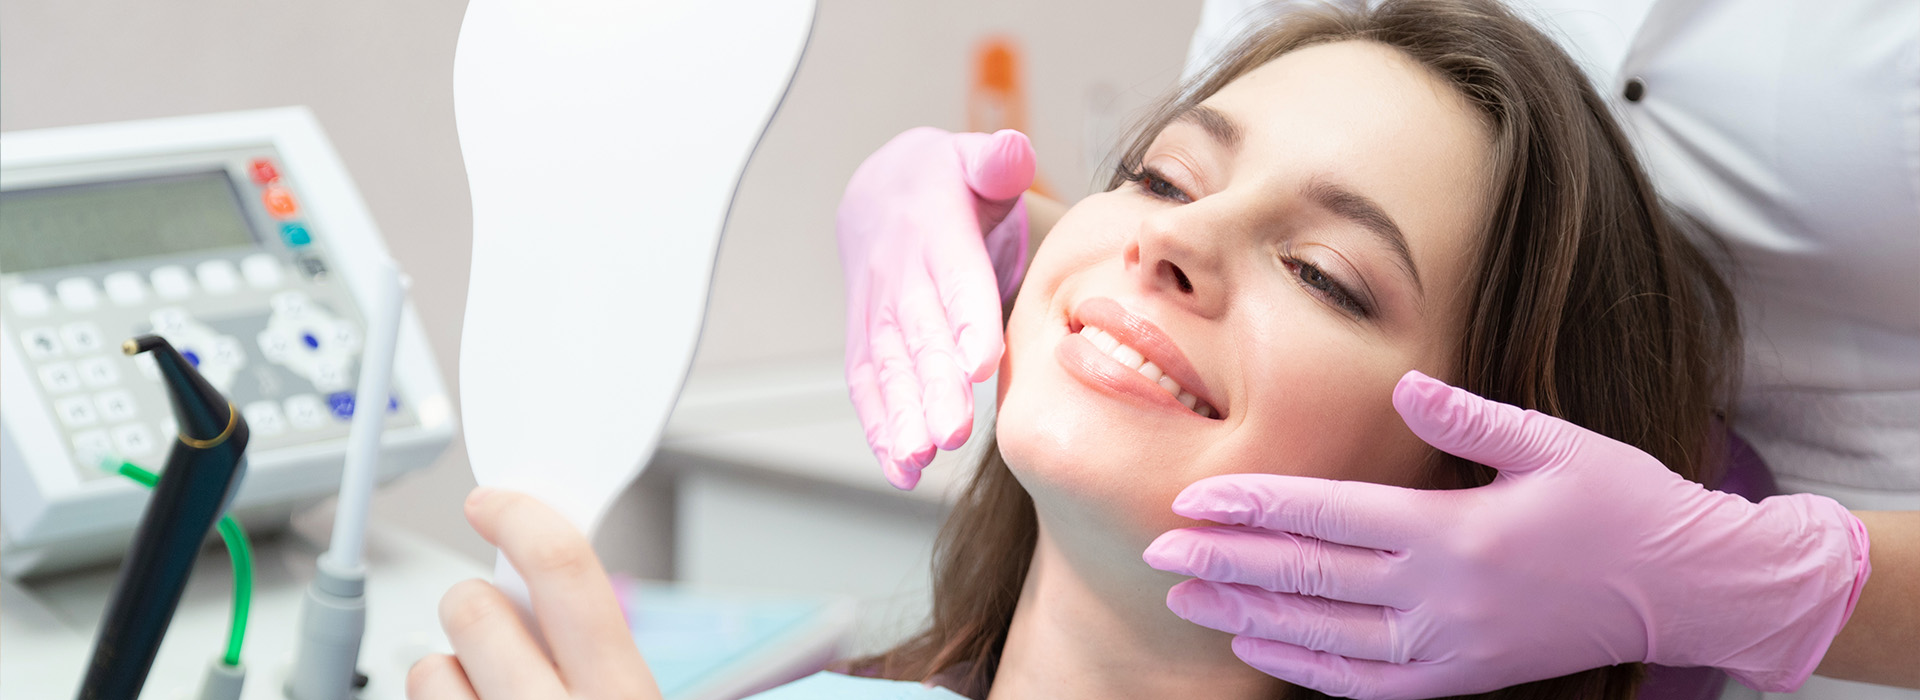 Divine Smiles Dental | Veneers, Invisalign reg  and Implant Dentistry